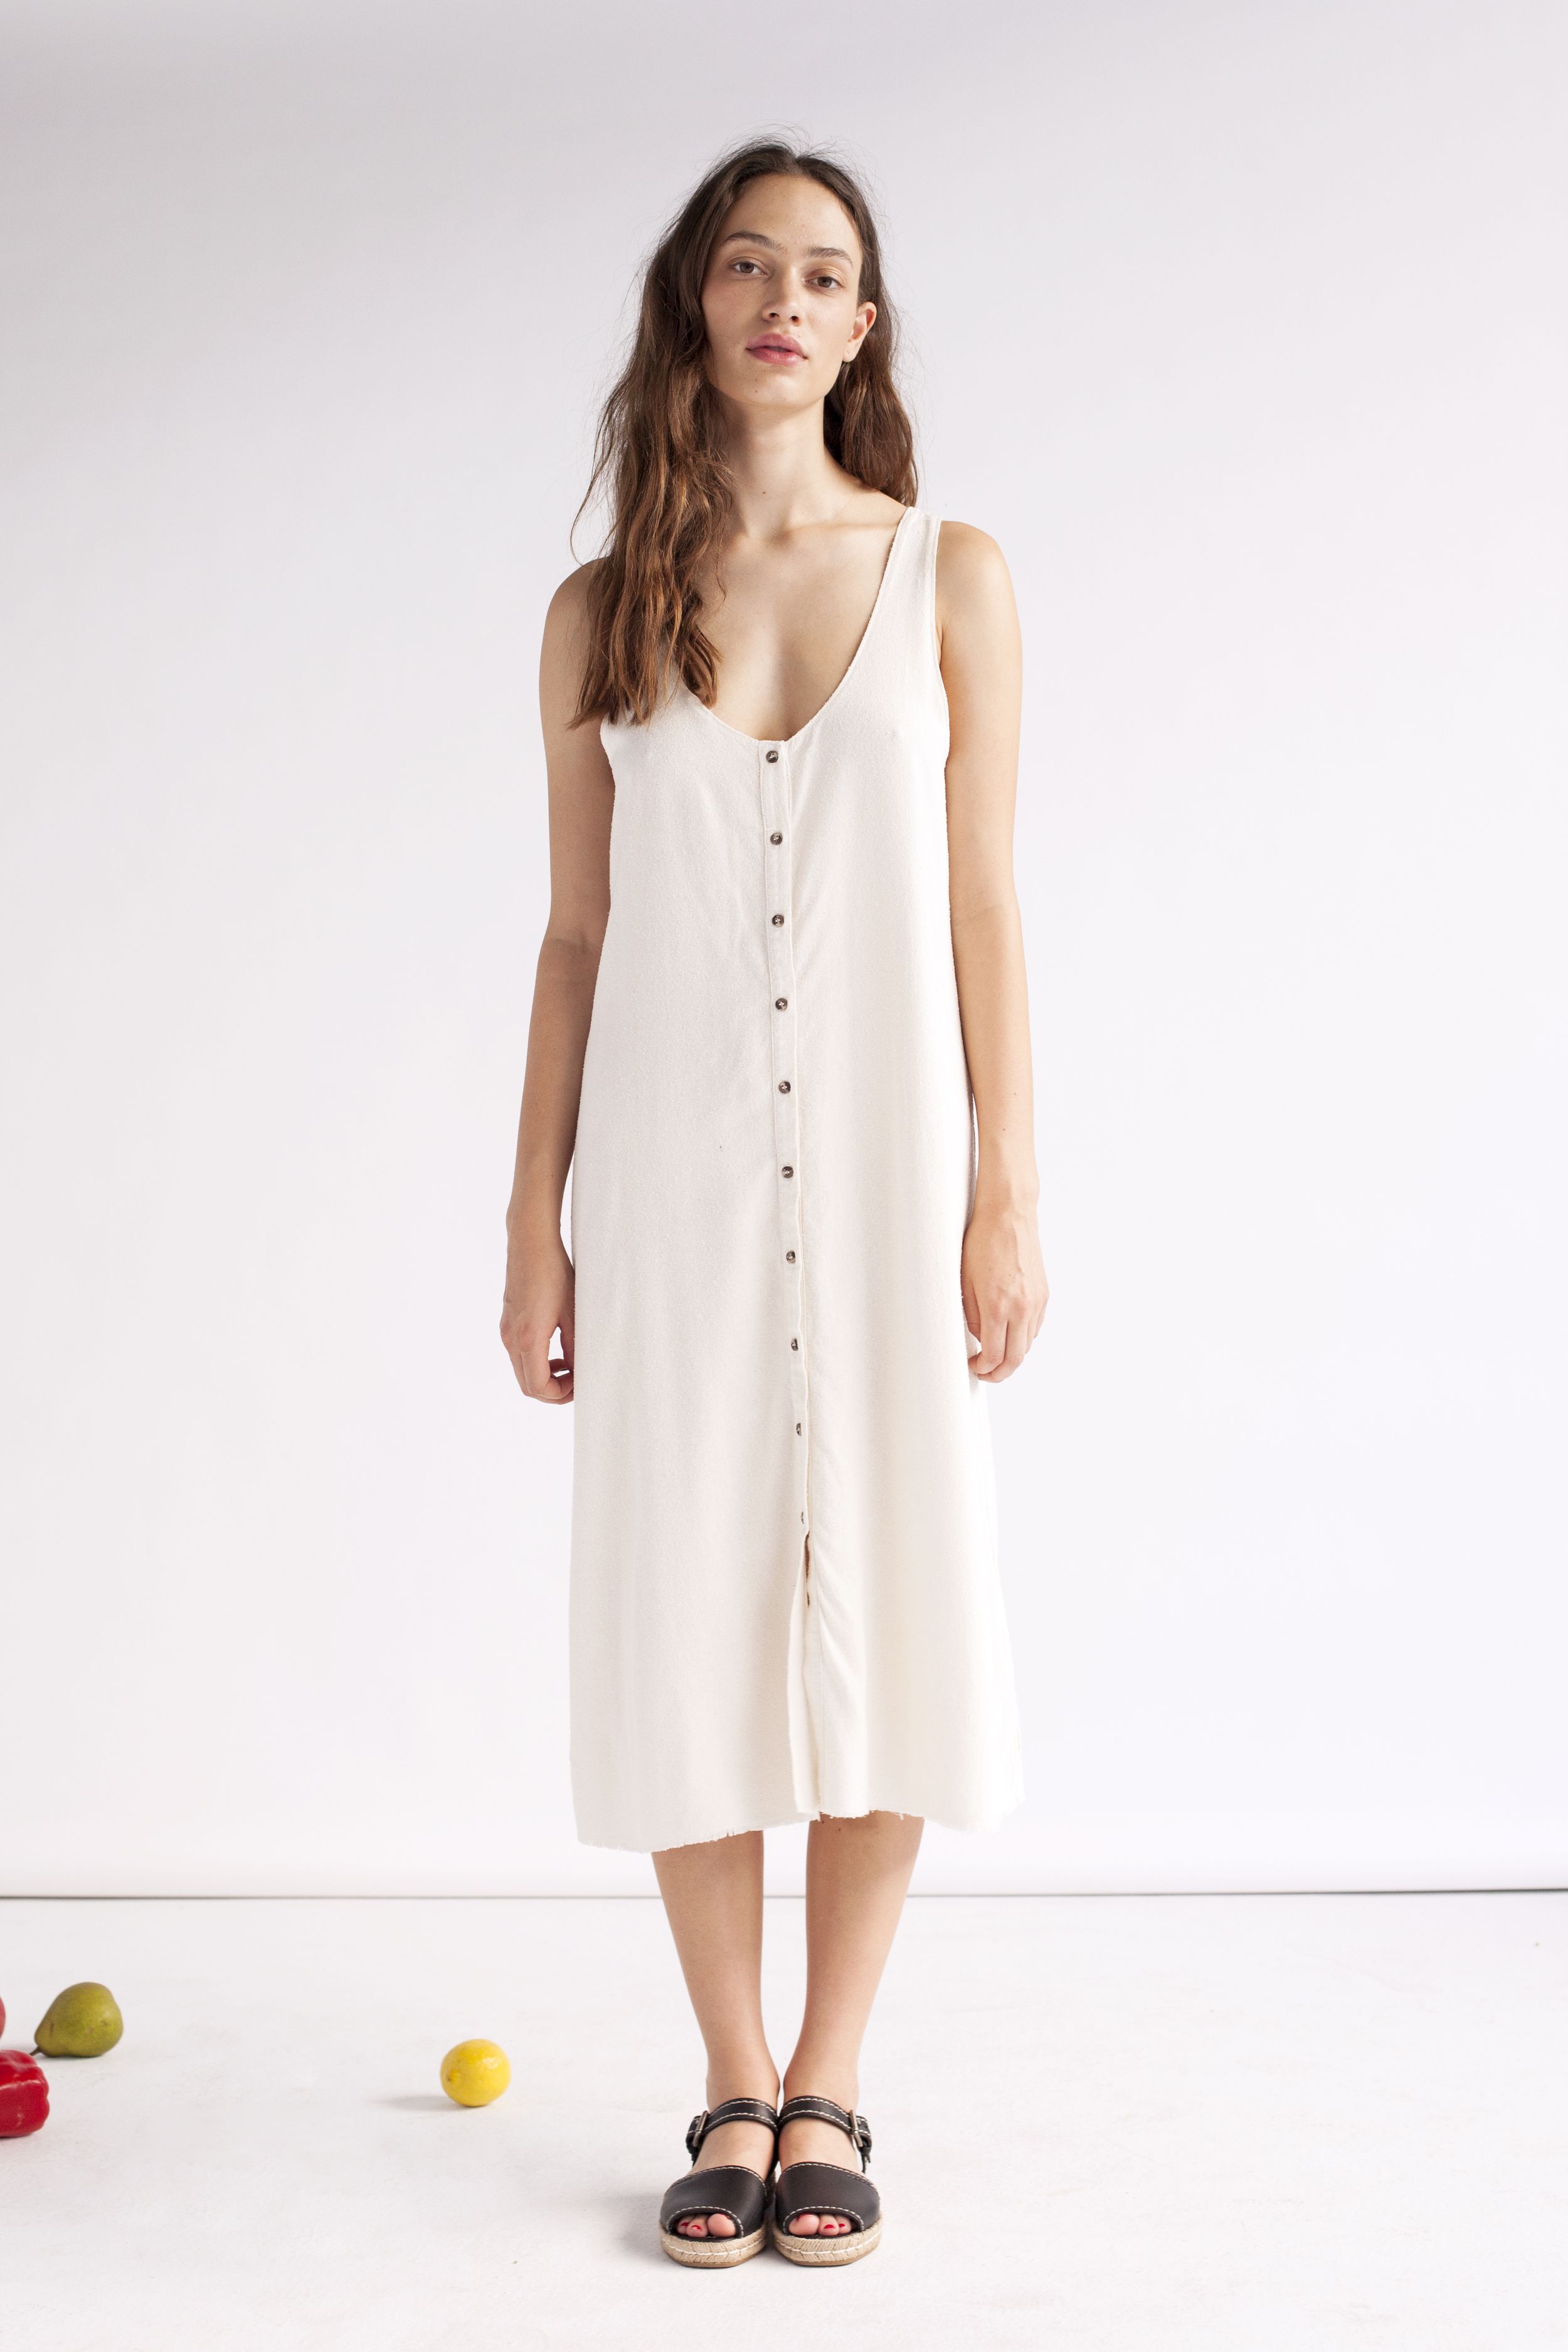  Lacausa Reversible Silk Dress White $187